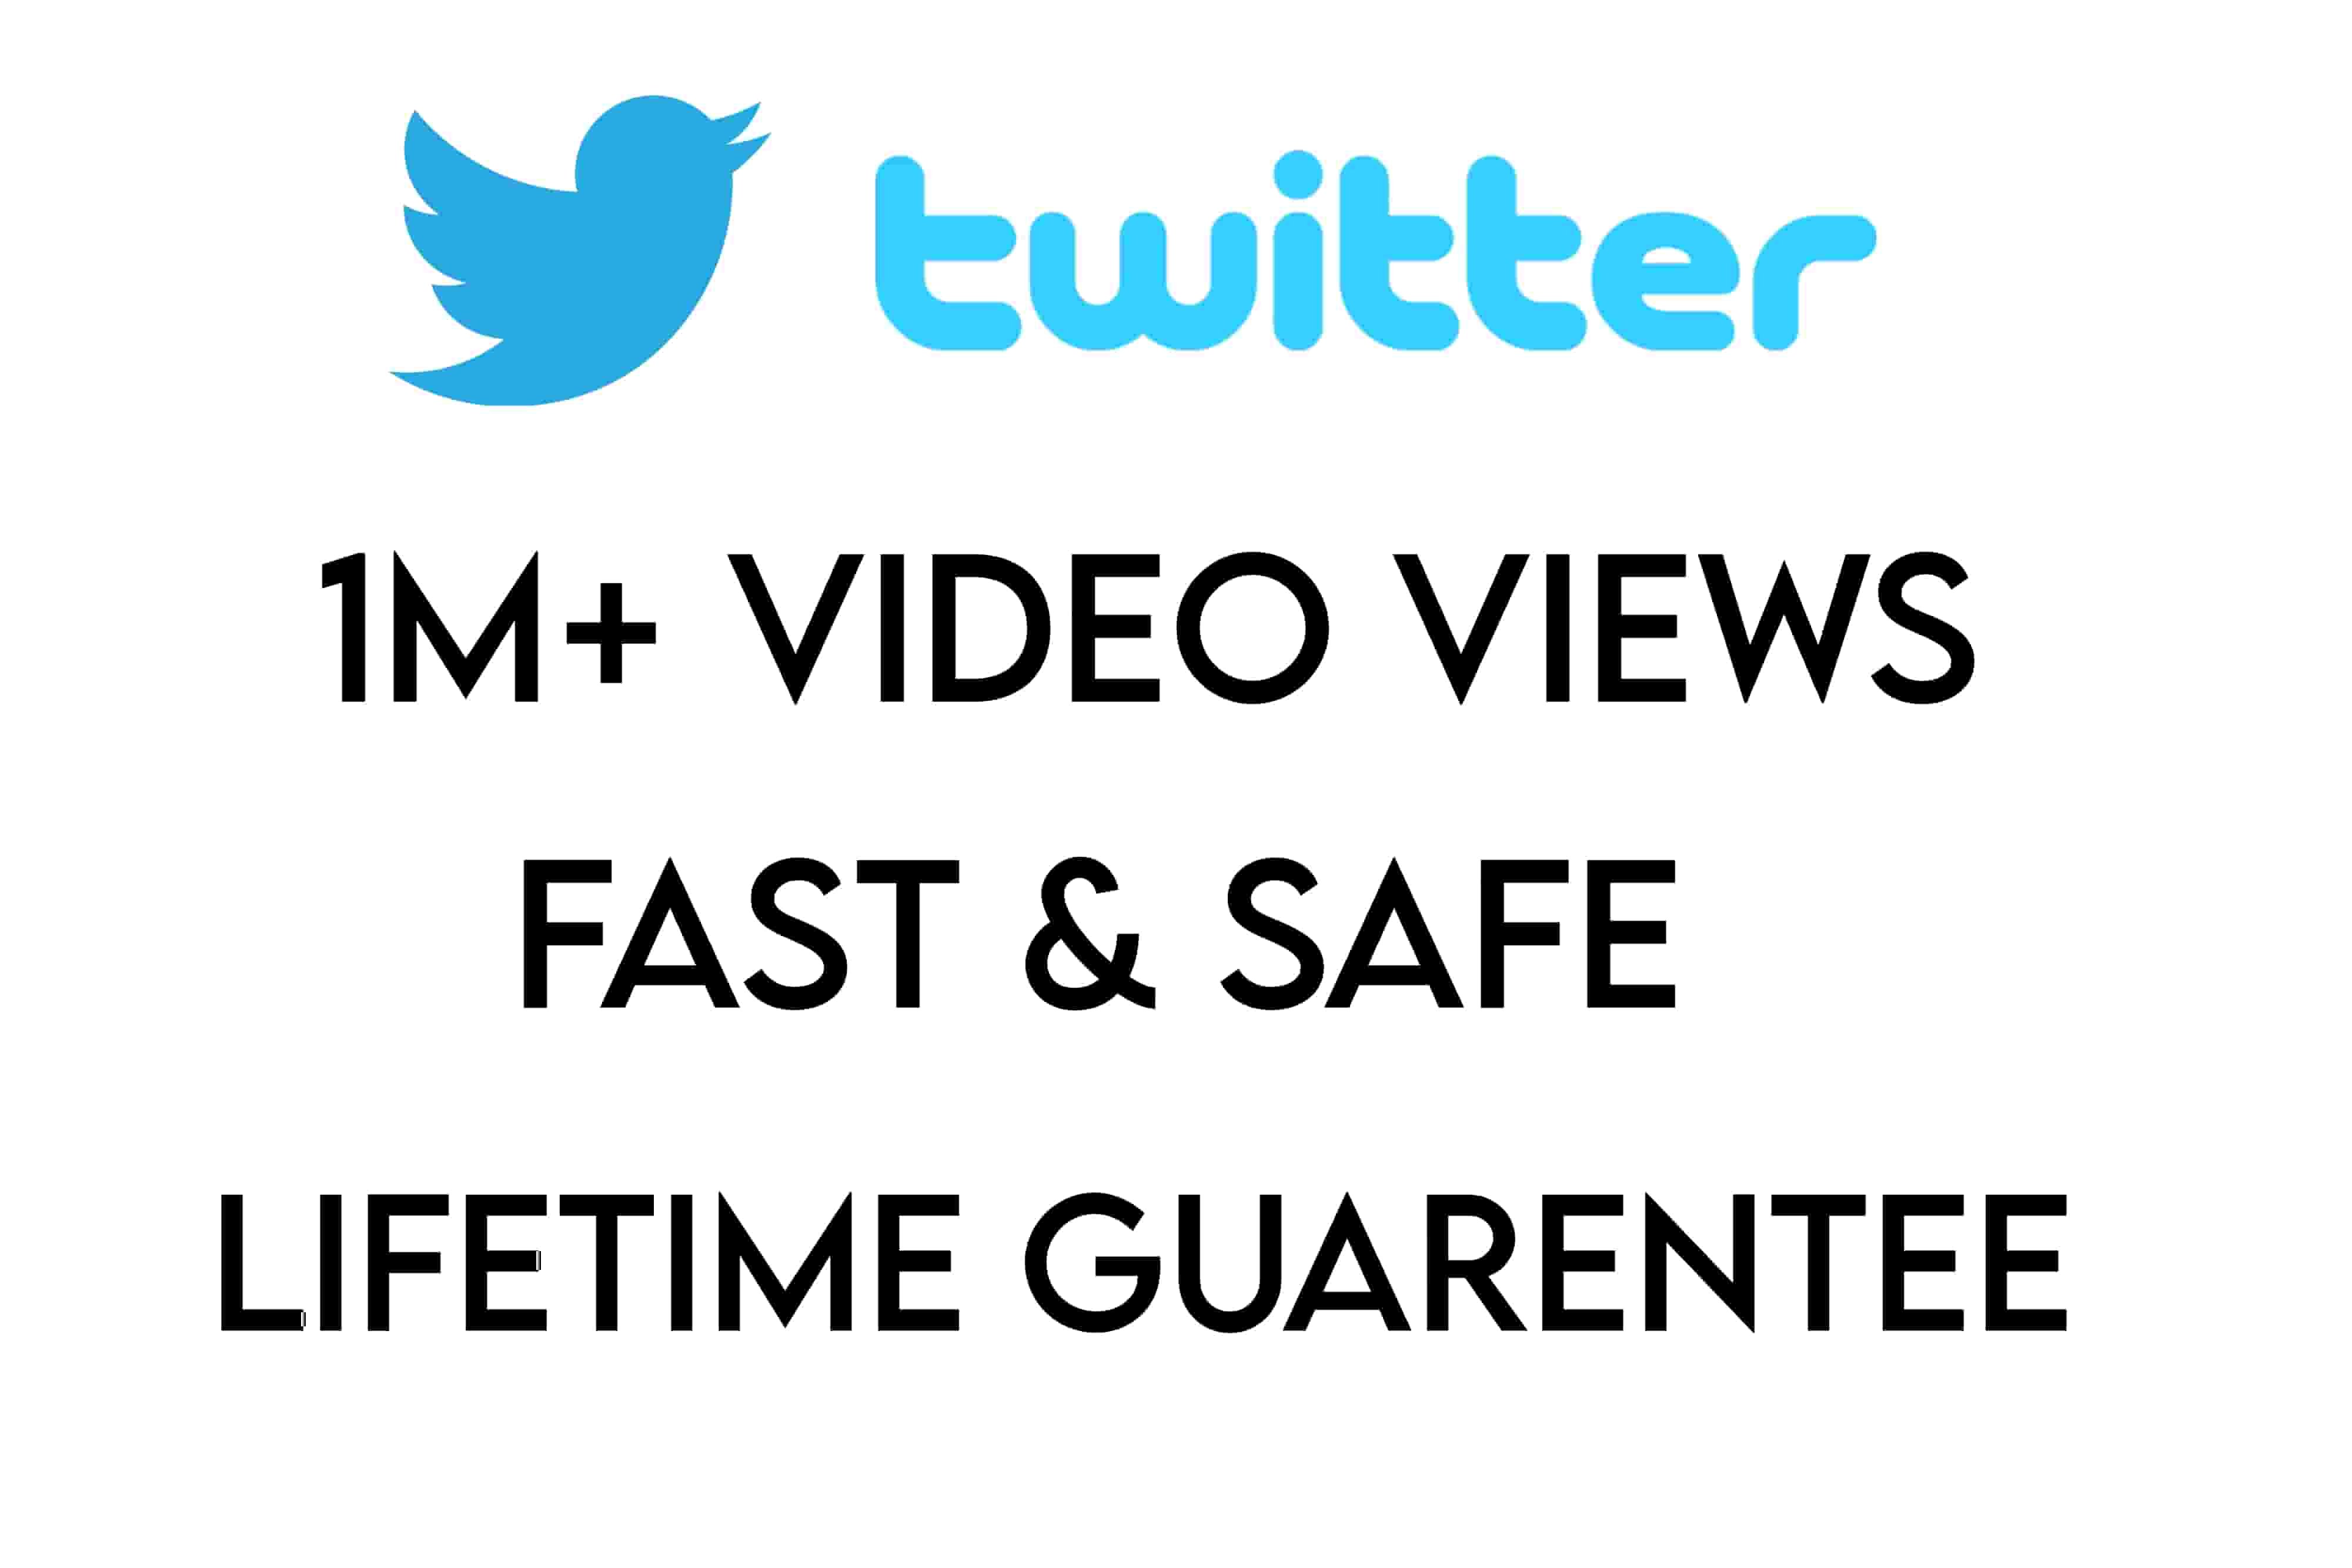 Twitter 1M+ Video Views, Fast & Safe, Lifetime Guarentee.